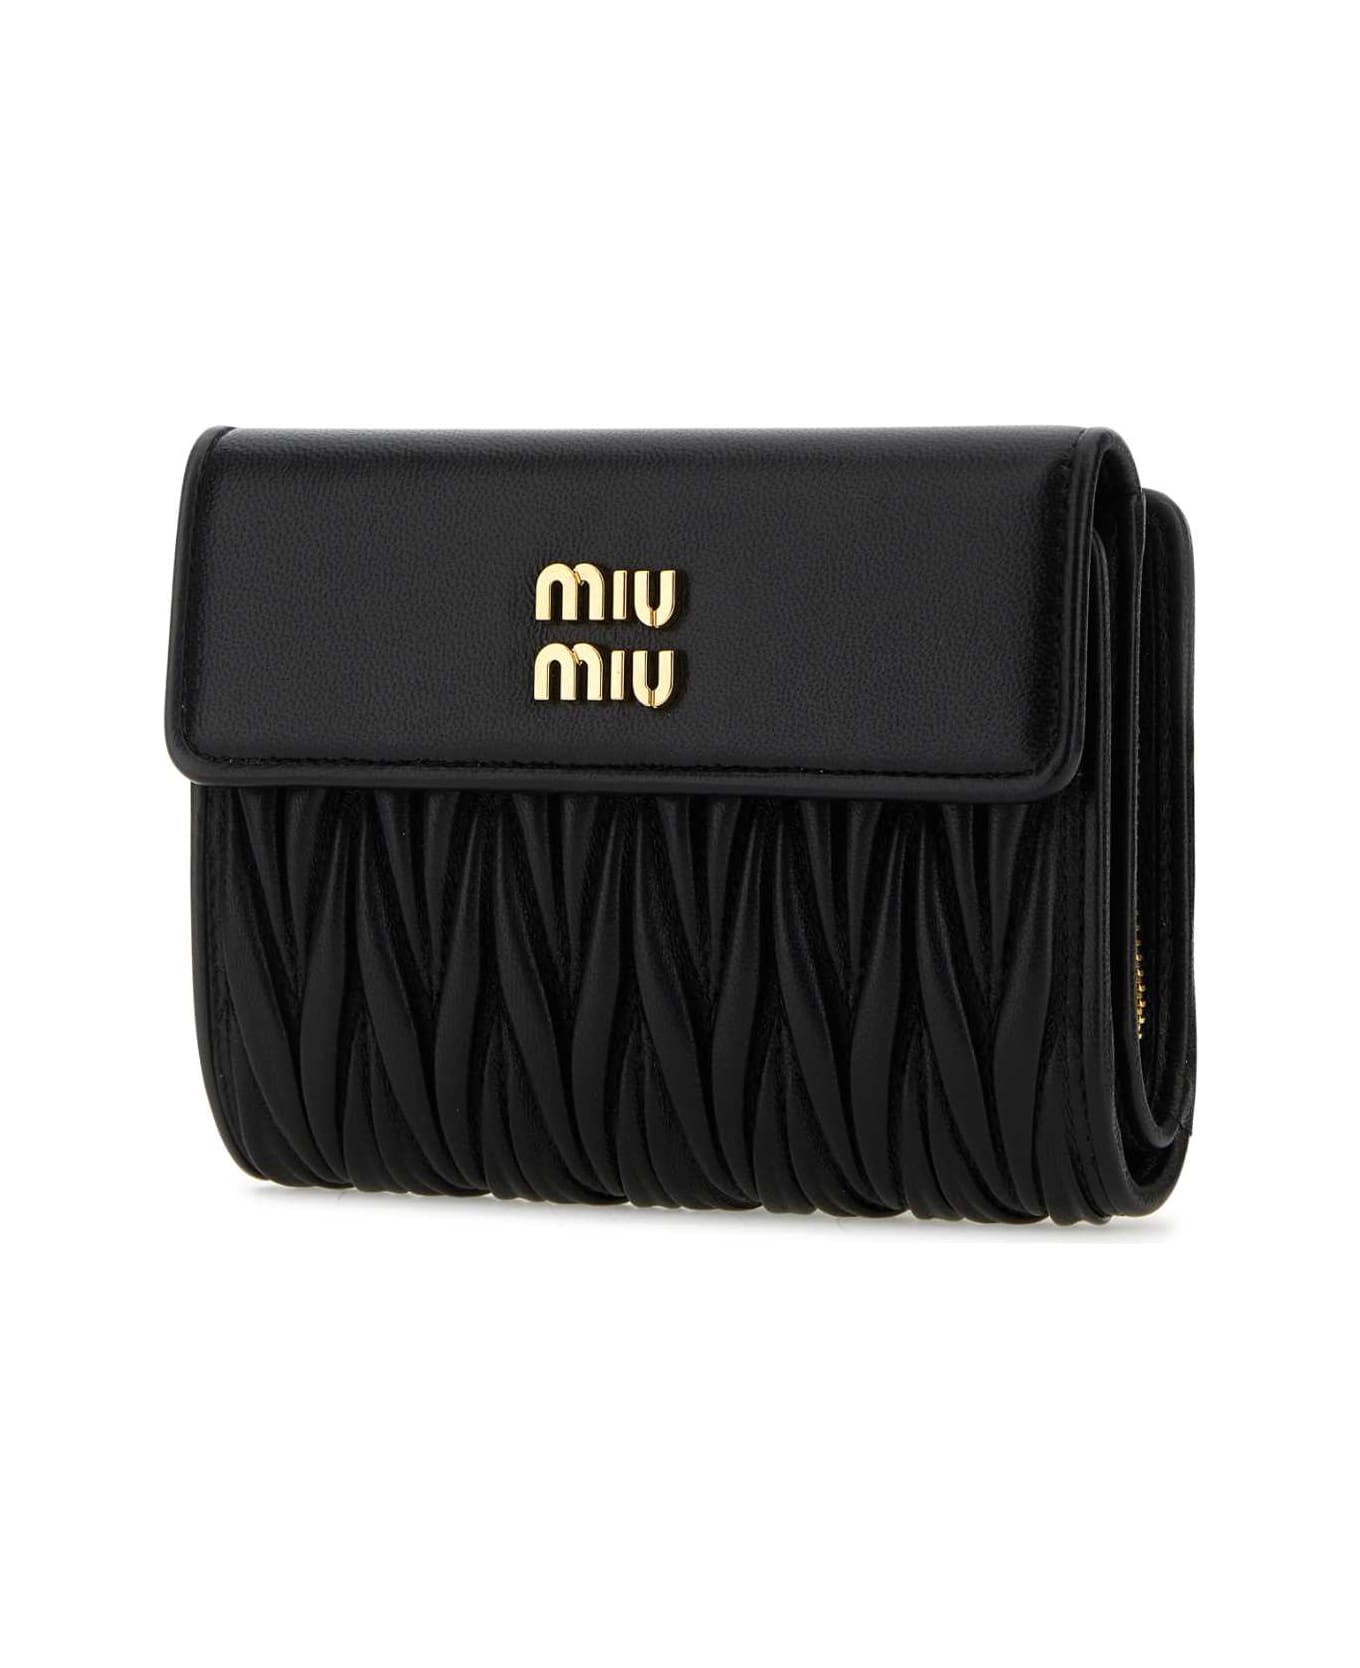 Miu Miu Black Nappa Leather Wallet - NERO